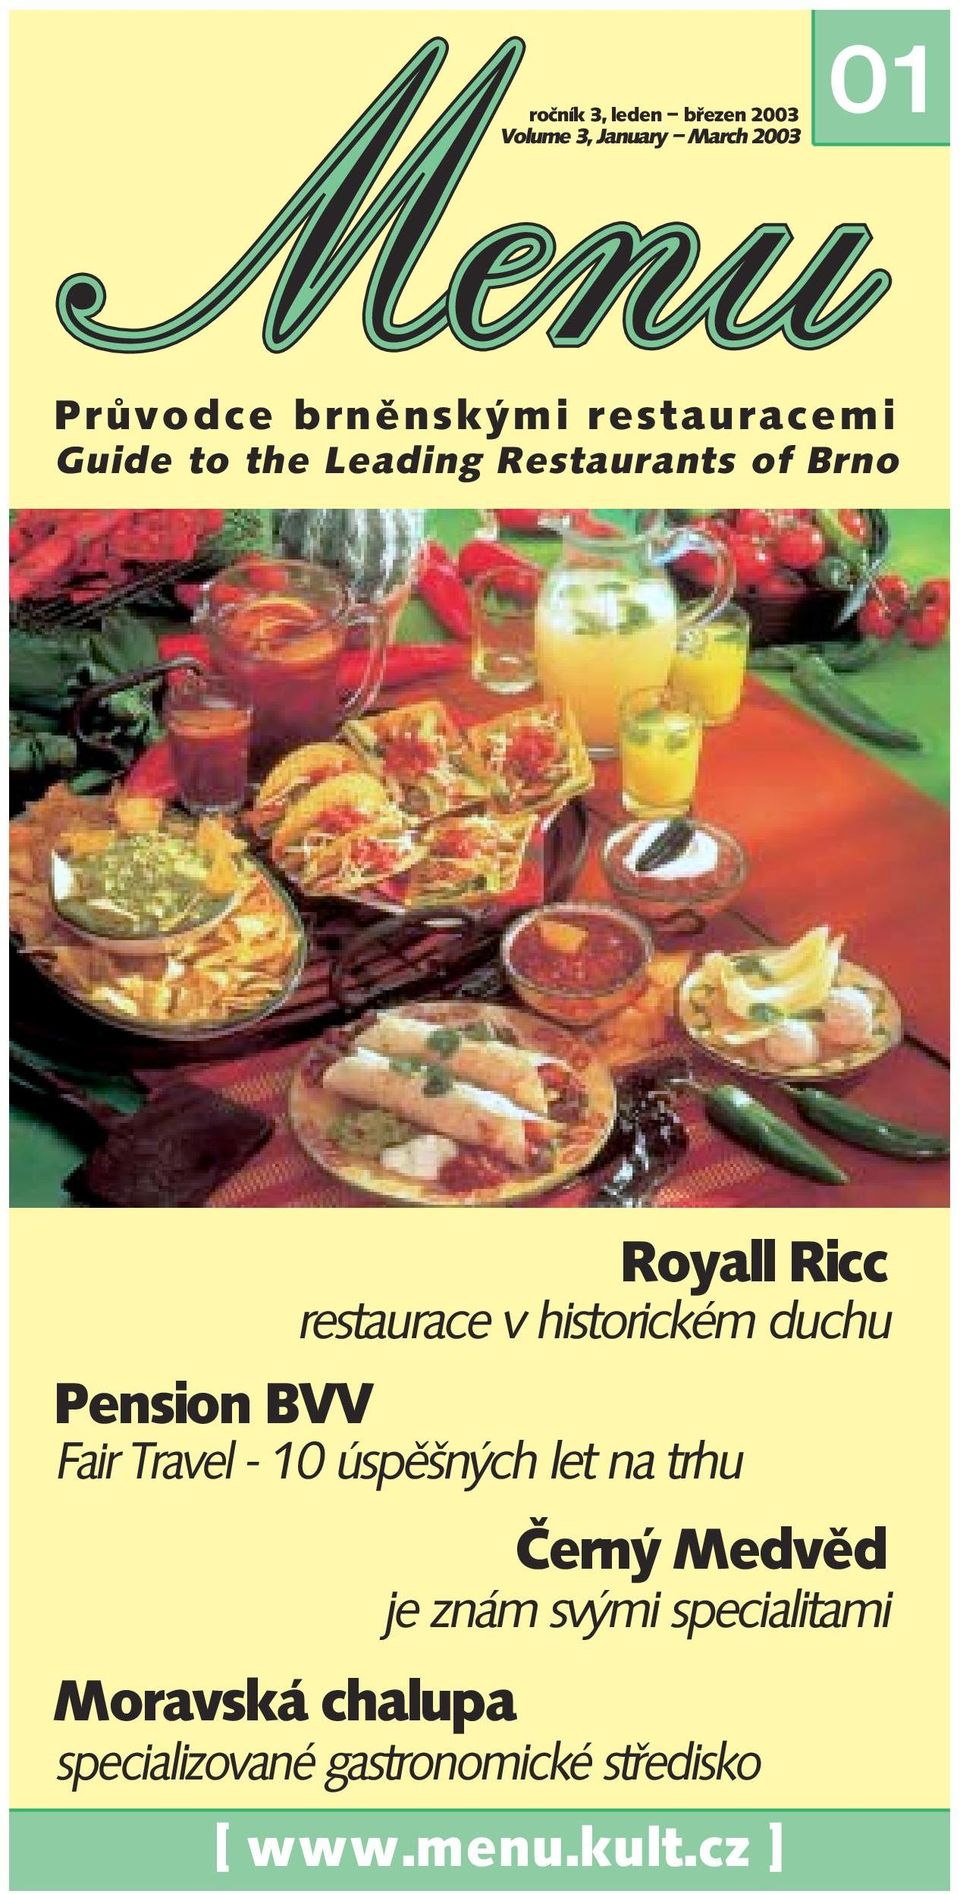 chalupa Royall Ricc restaurace v historickém duchu Fair Travel - 10 úspěšných